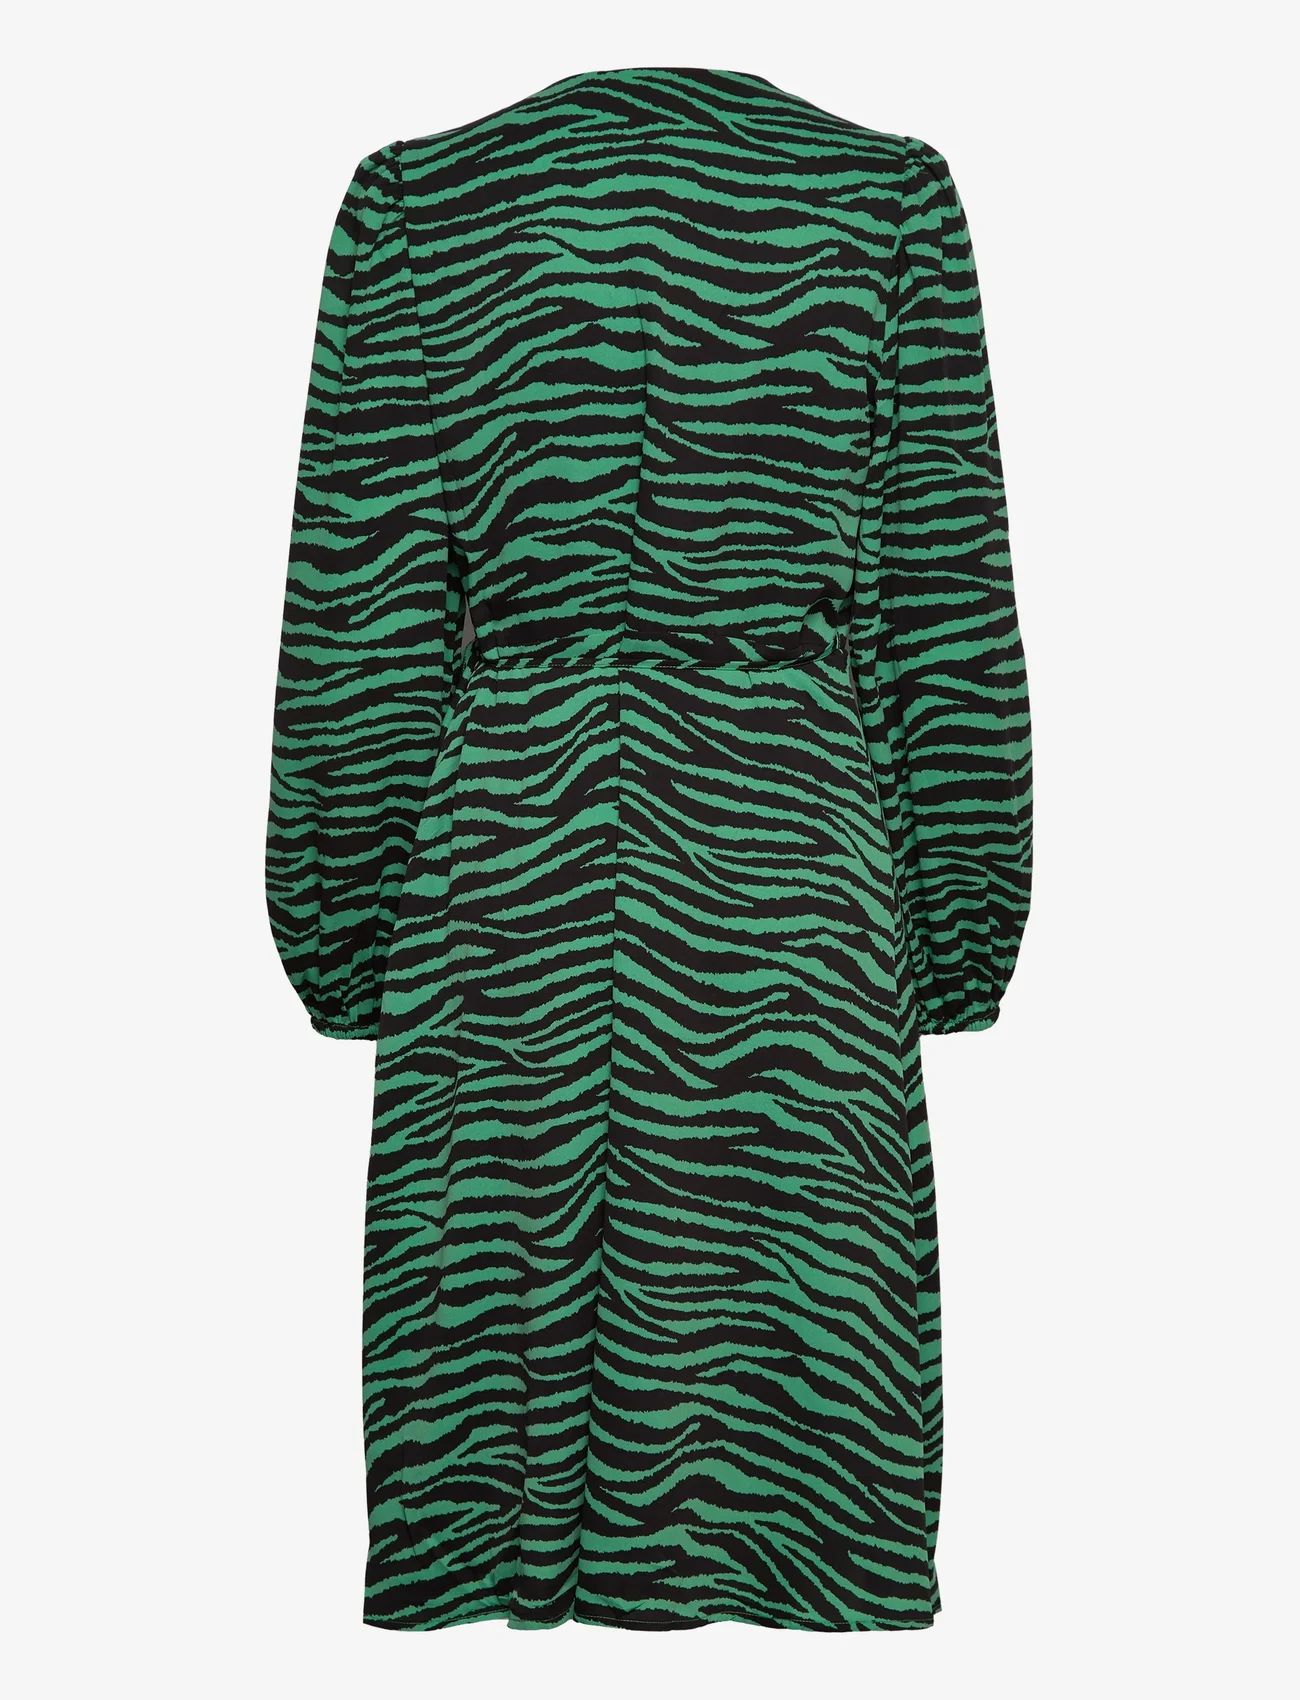 Minus - Evelyn Wrap Dress - wickelkleider - apple green animal print - 1